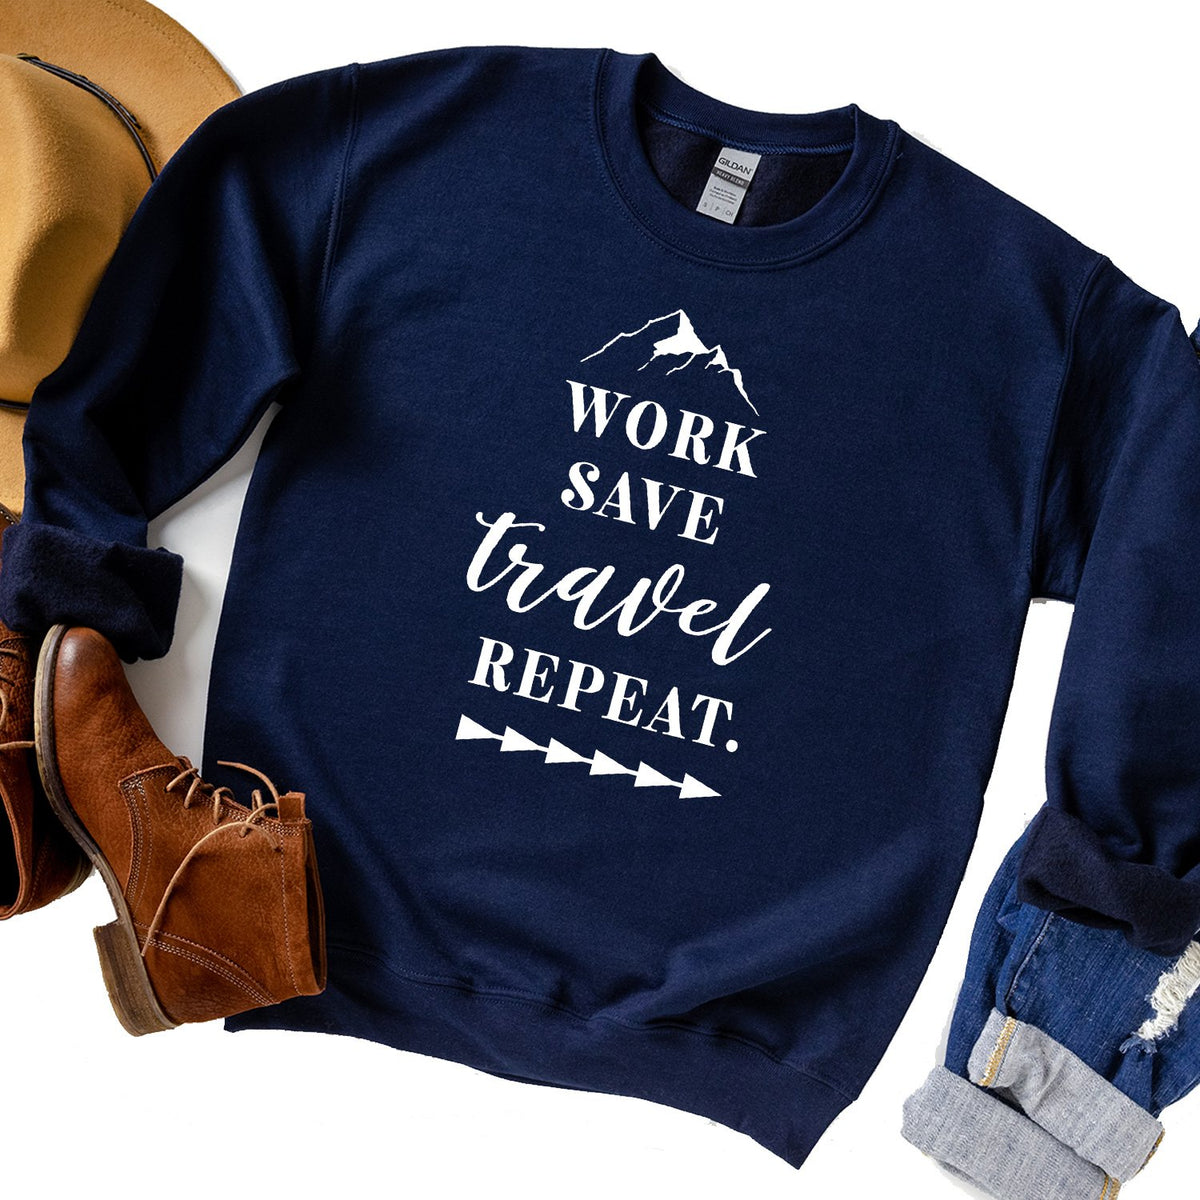 Work Save Travel Repeat - Long Sleeve Heavy Crewneck Sweatshirt